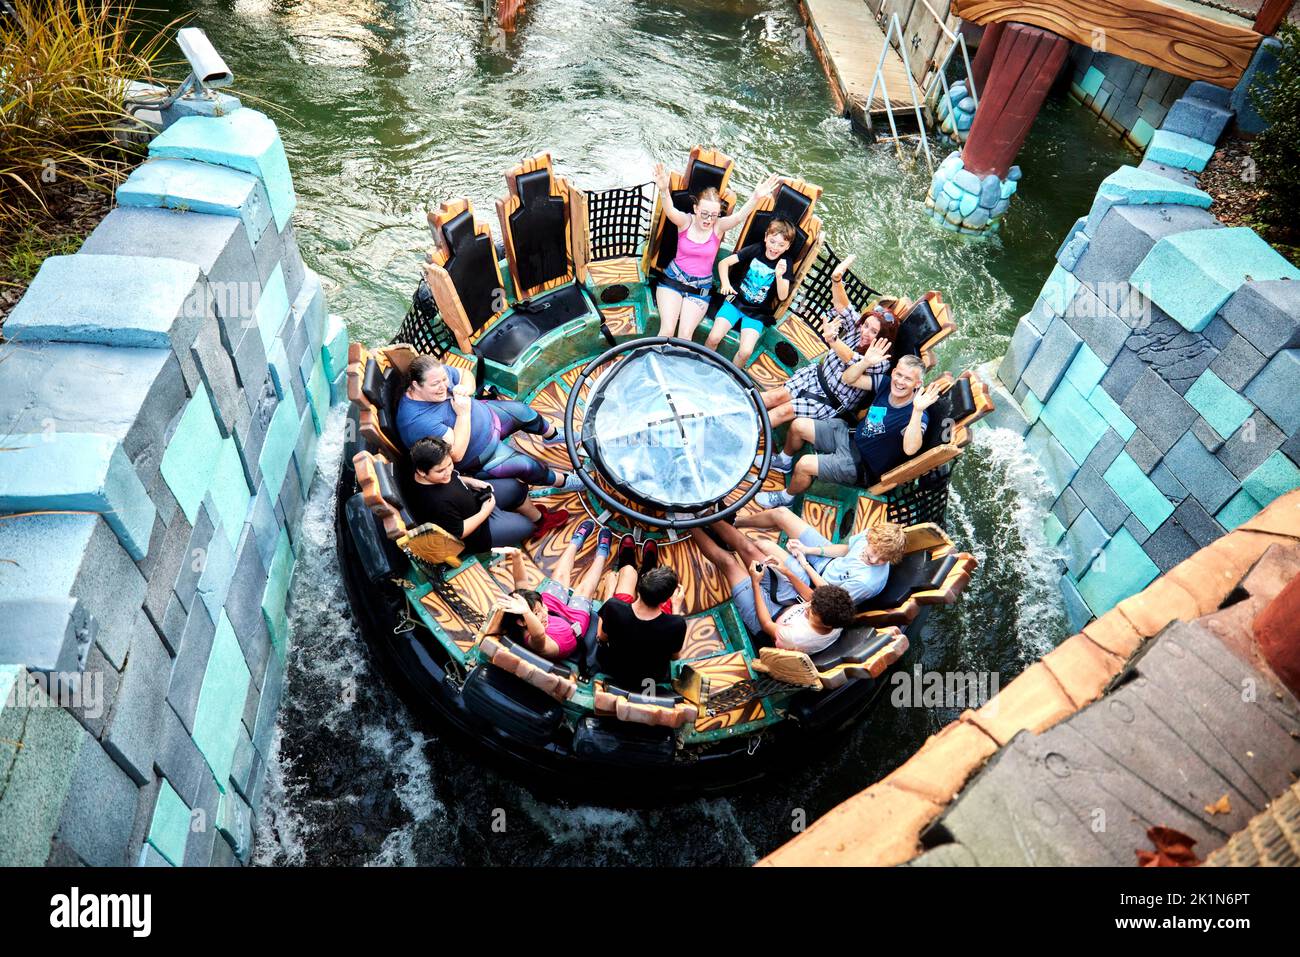 Universal Studios Florida thème Popeye Raging Rapids Water Ride Banque D'Images